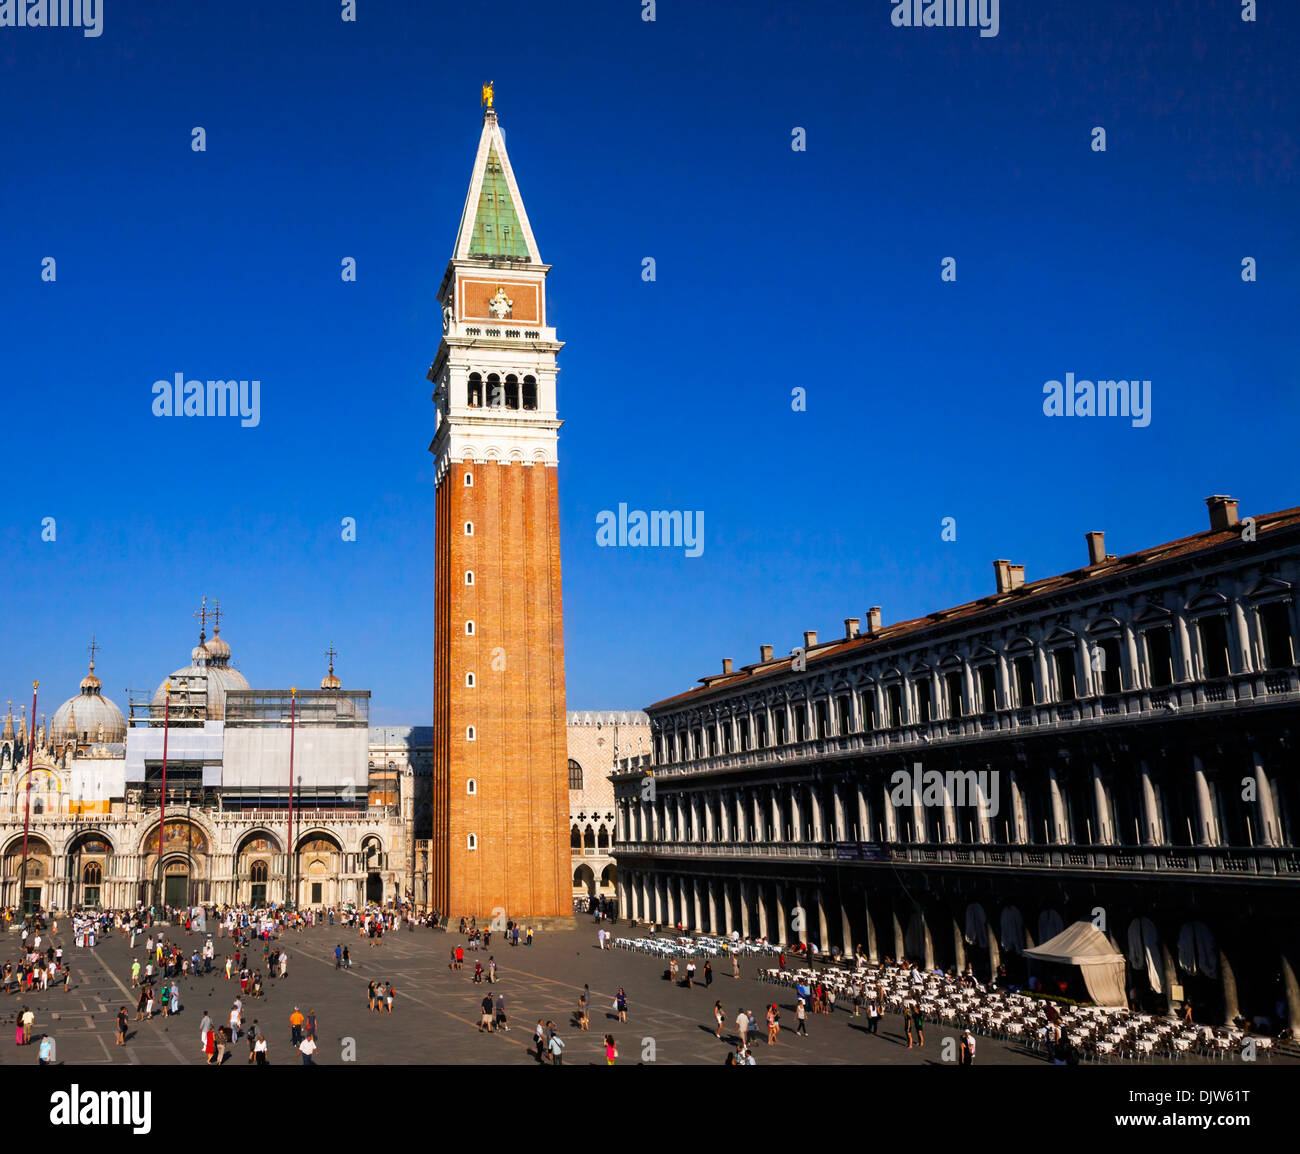 Campanile di San Marco torre campanaria, Piazzetta San Marco, Venezia, Veneto, Italia. Foto Stock